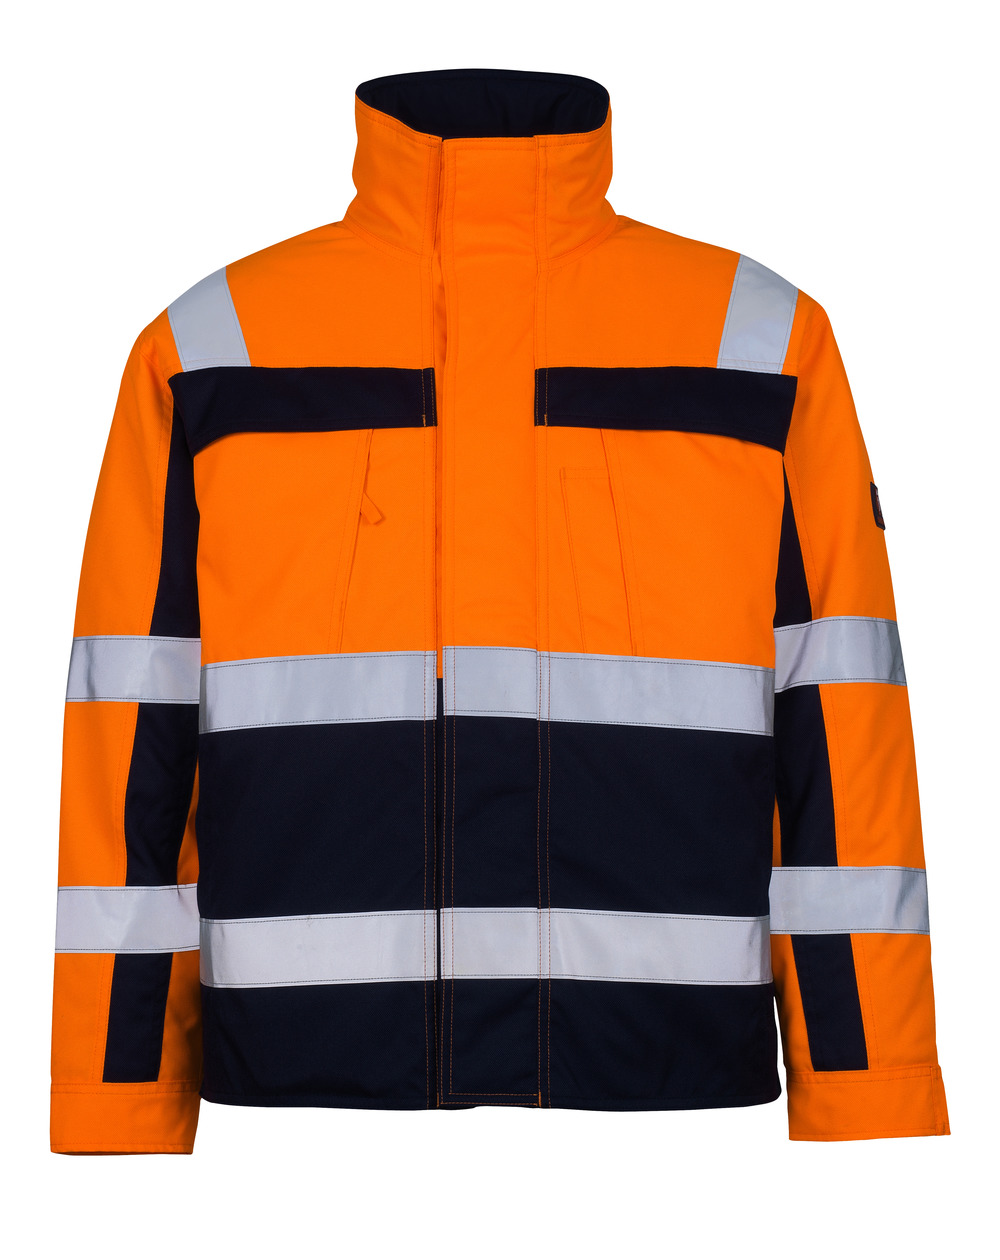 MASCOT-Workwear-Warn-Schutz-Piloten-Arbeits-Berufs-Jacke, TIMON, orange/marine